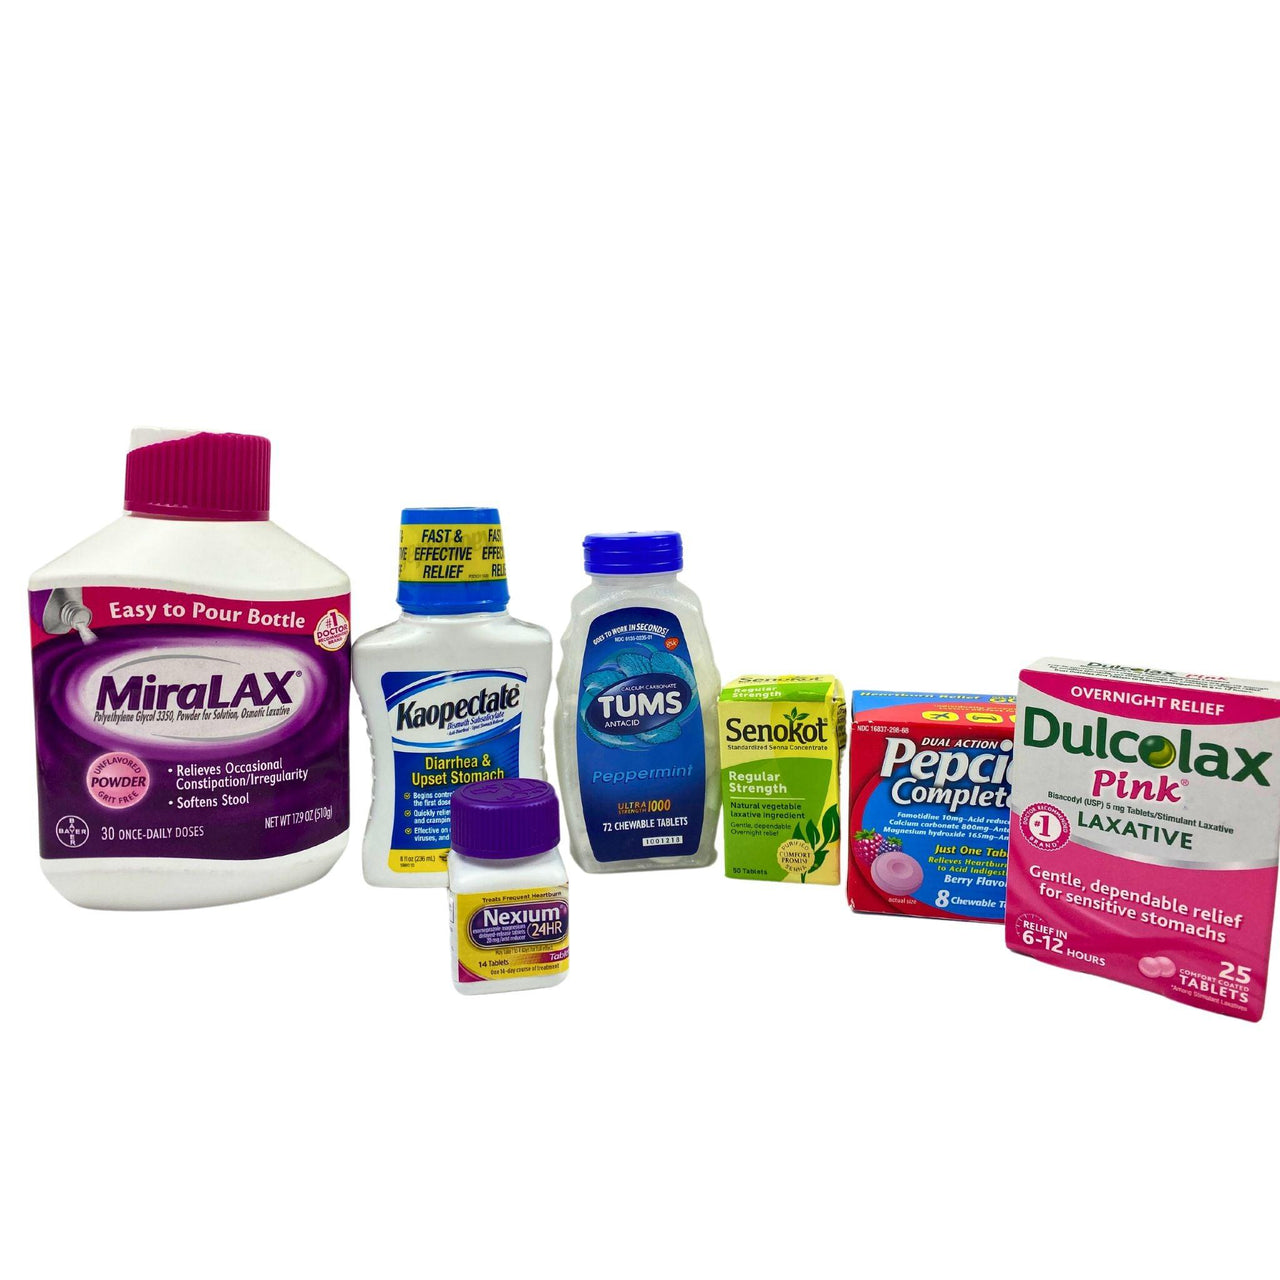 Stomach Relief Assorted Mix Incudes Dulcolax,Pepcid Complete,Nexium,Miralax (40 Pcs Lot) - Discount Wholesalers Inc